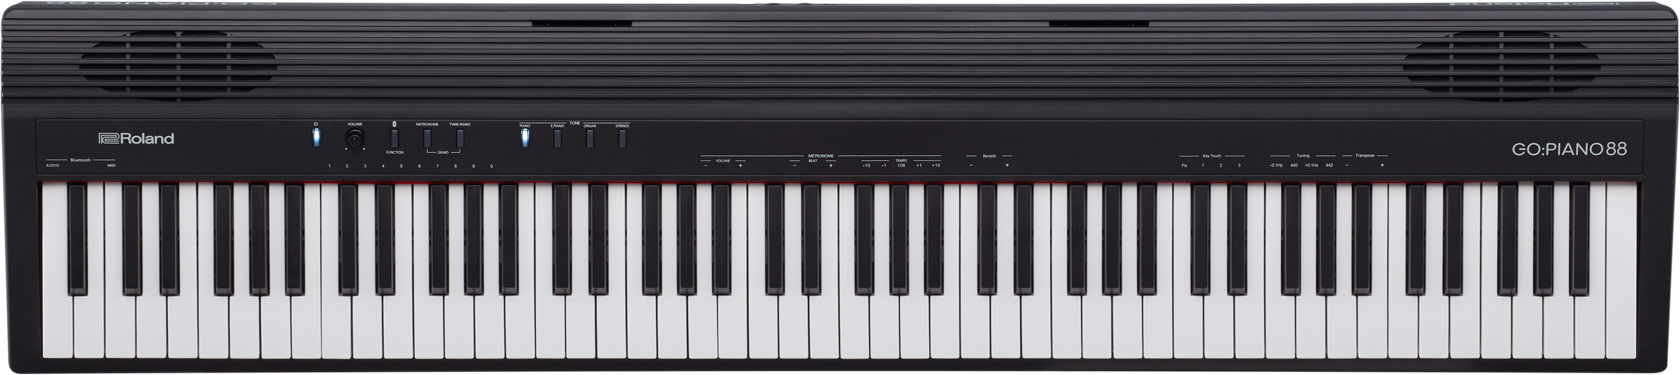 Roland GO PIANO 88 električni klavir